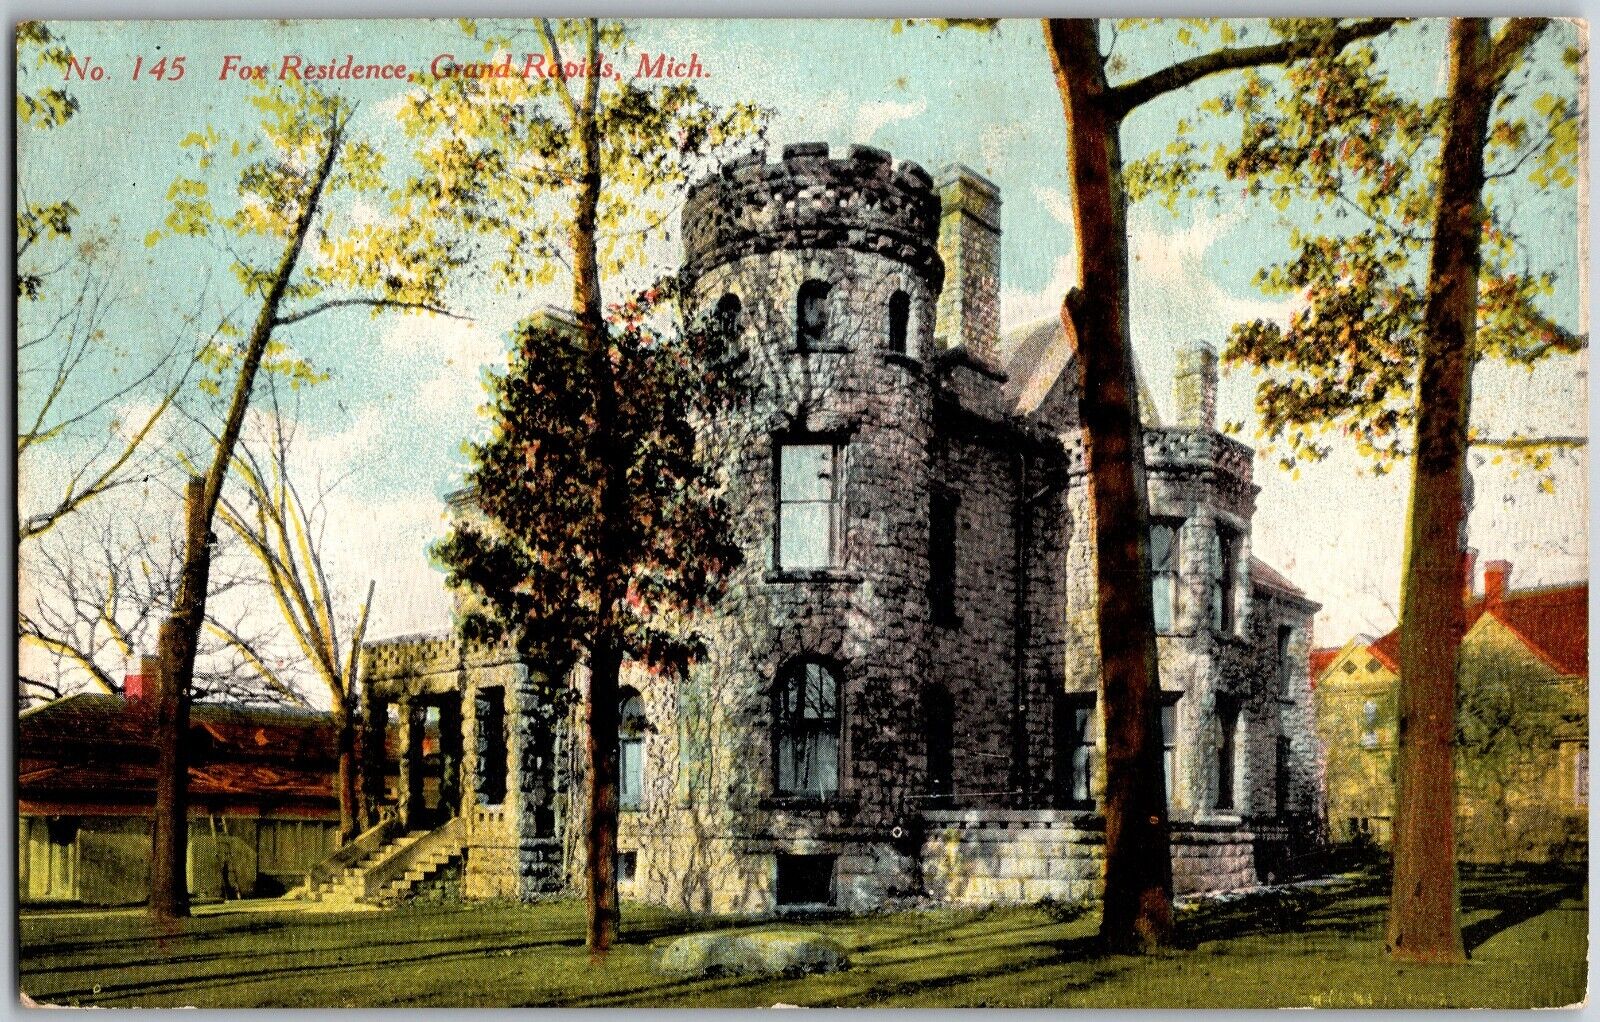 Grand Rapids, Michigan MI - Fox Residence - Vintage Postcard